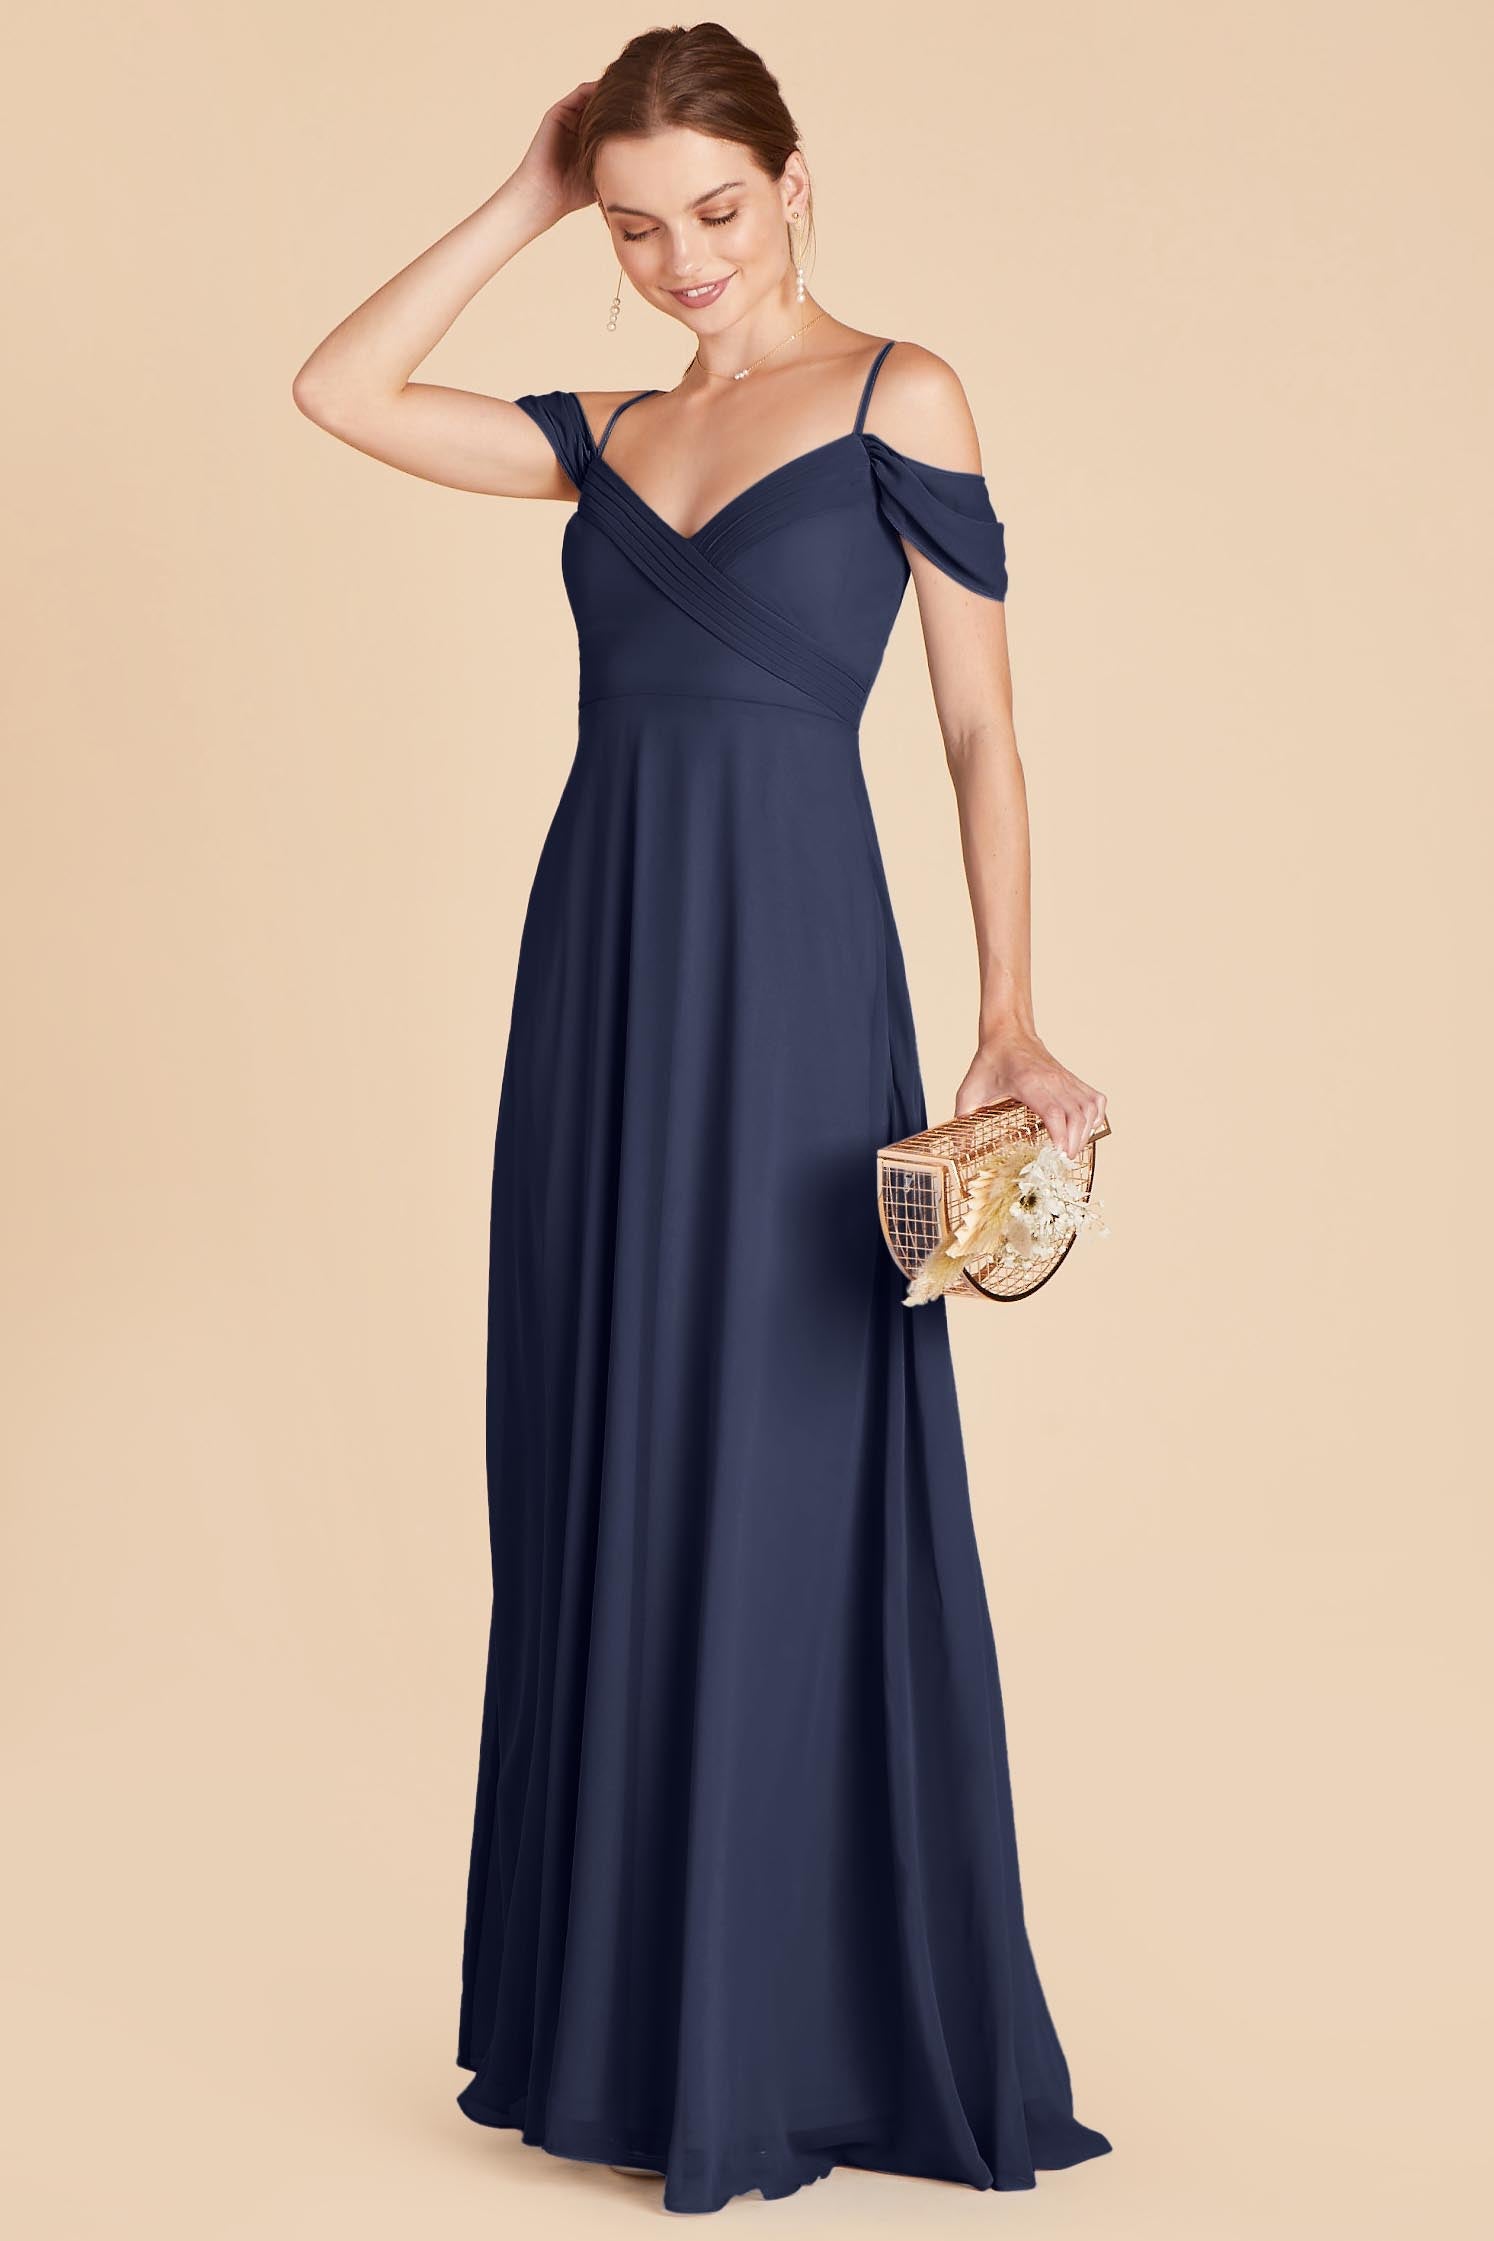 Slate Blue Spence Convertible Dress by Birdy Grey